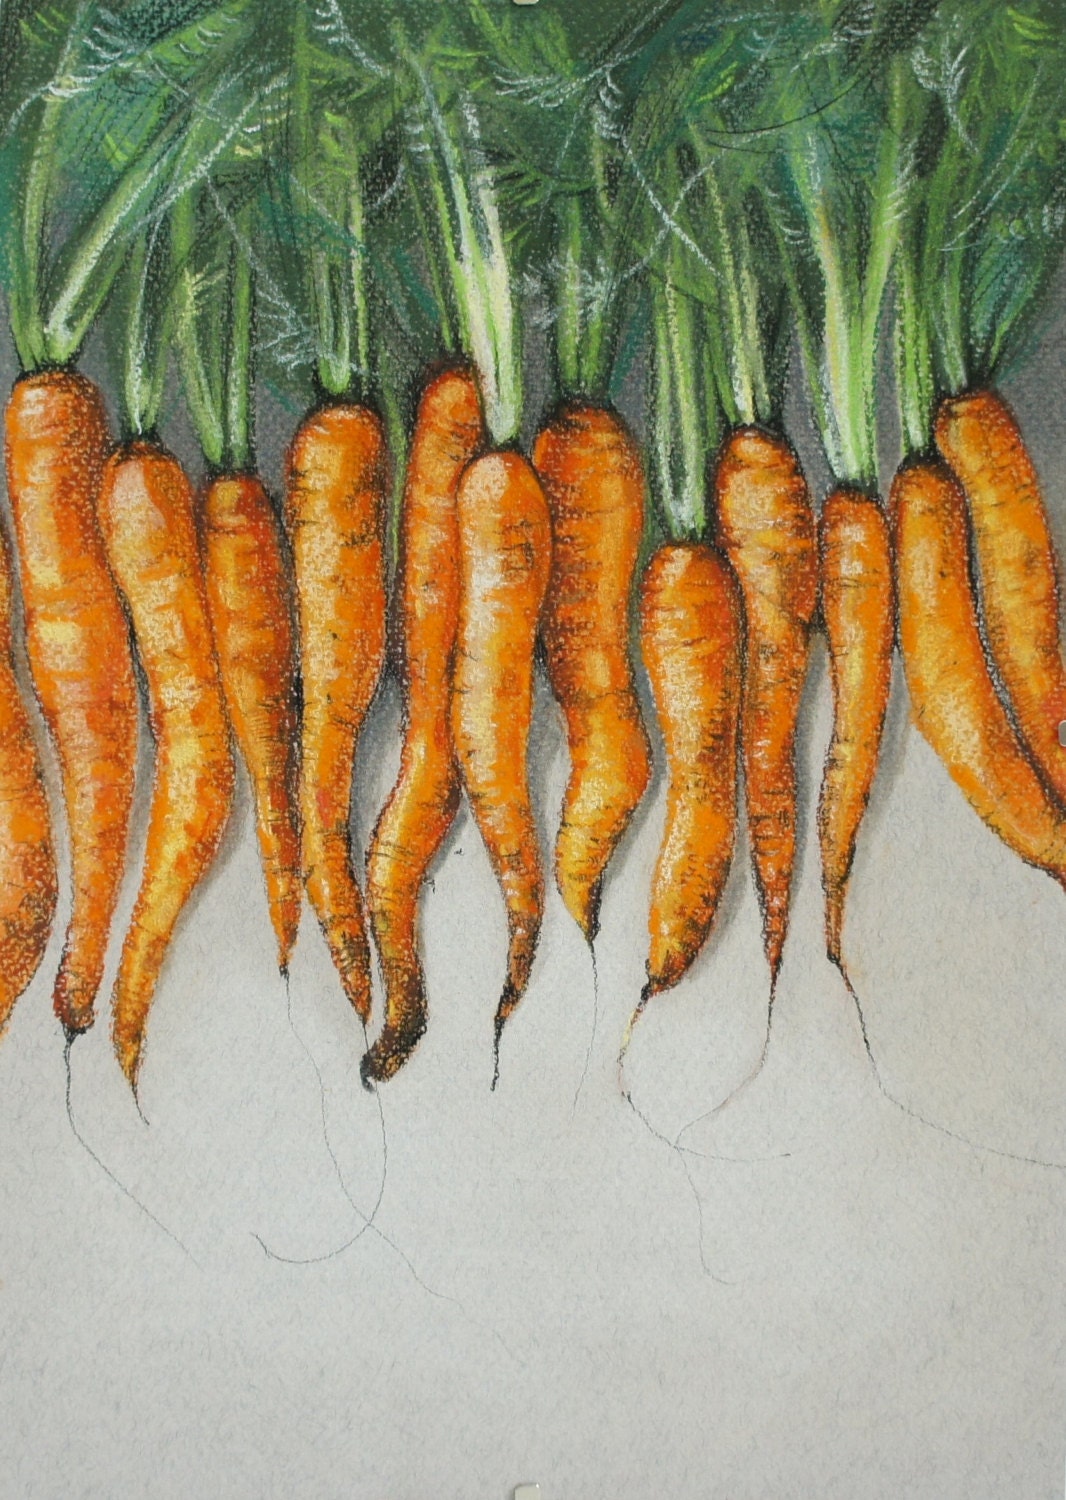 Carrot artist